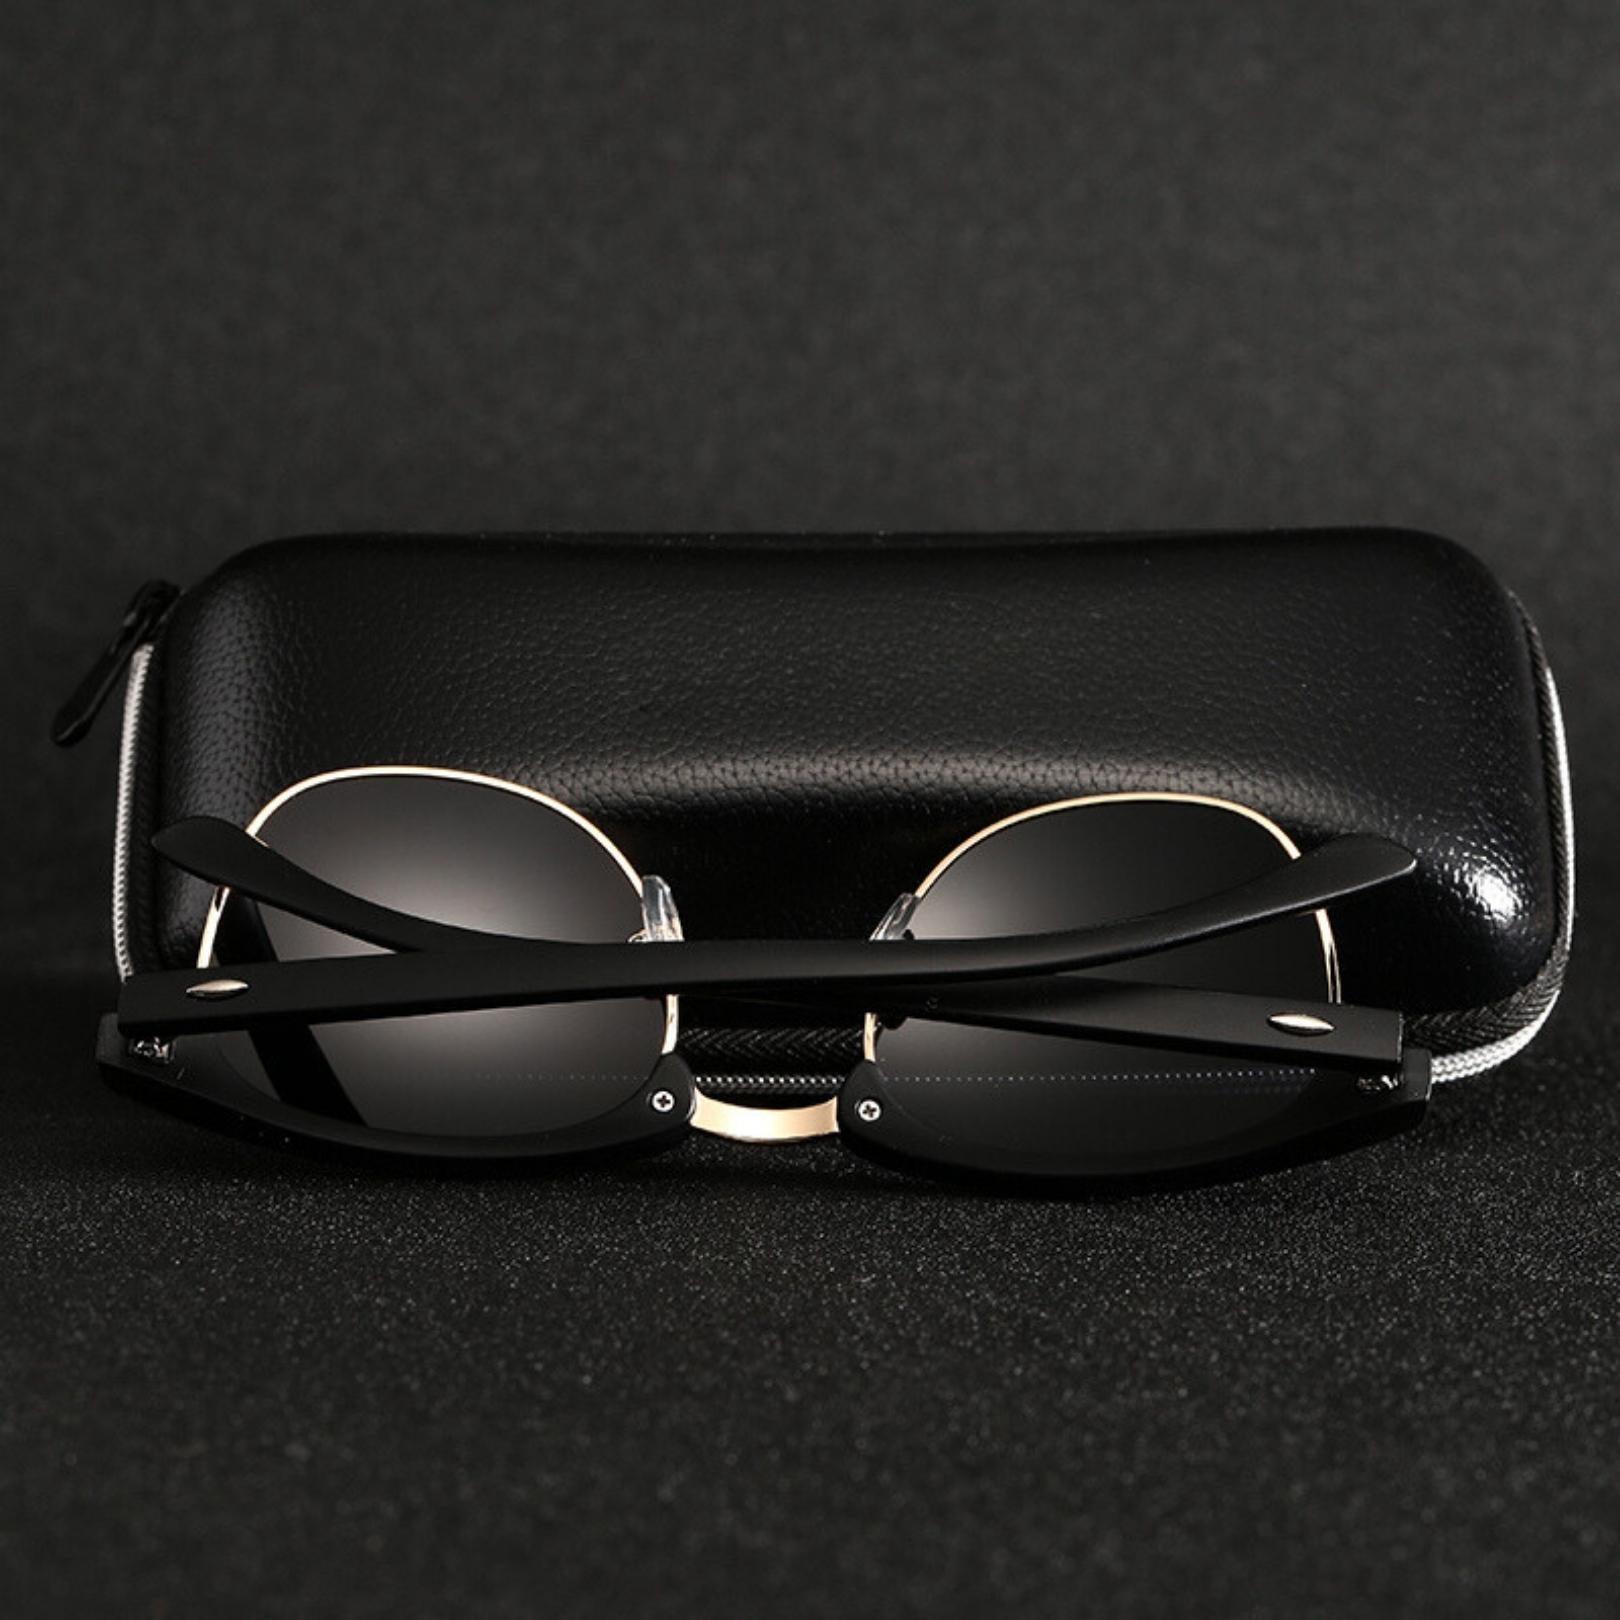 Óculos de Sol Masculino Tablot Qualidade Premium